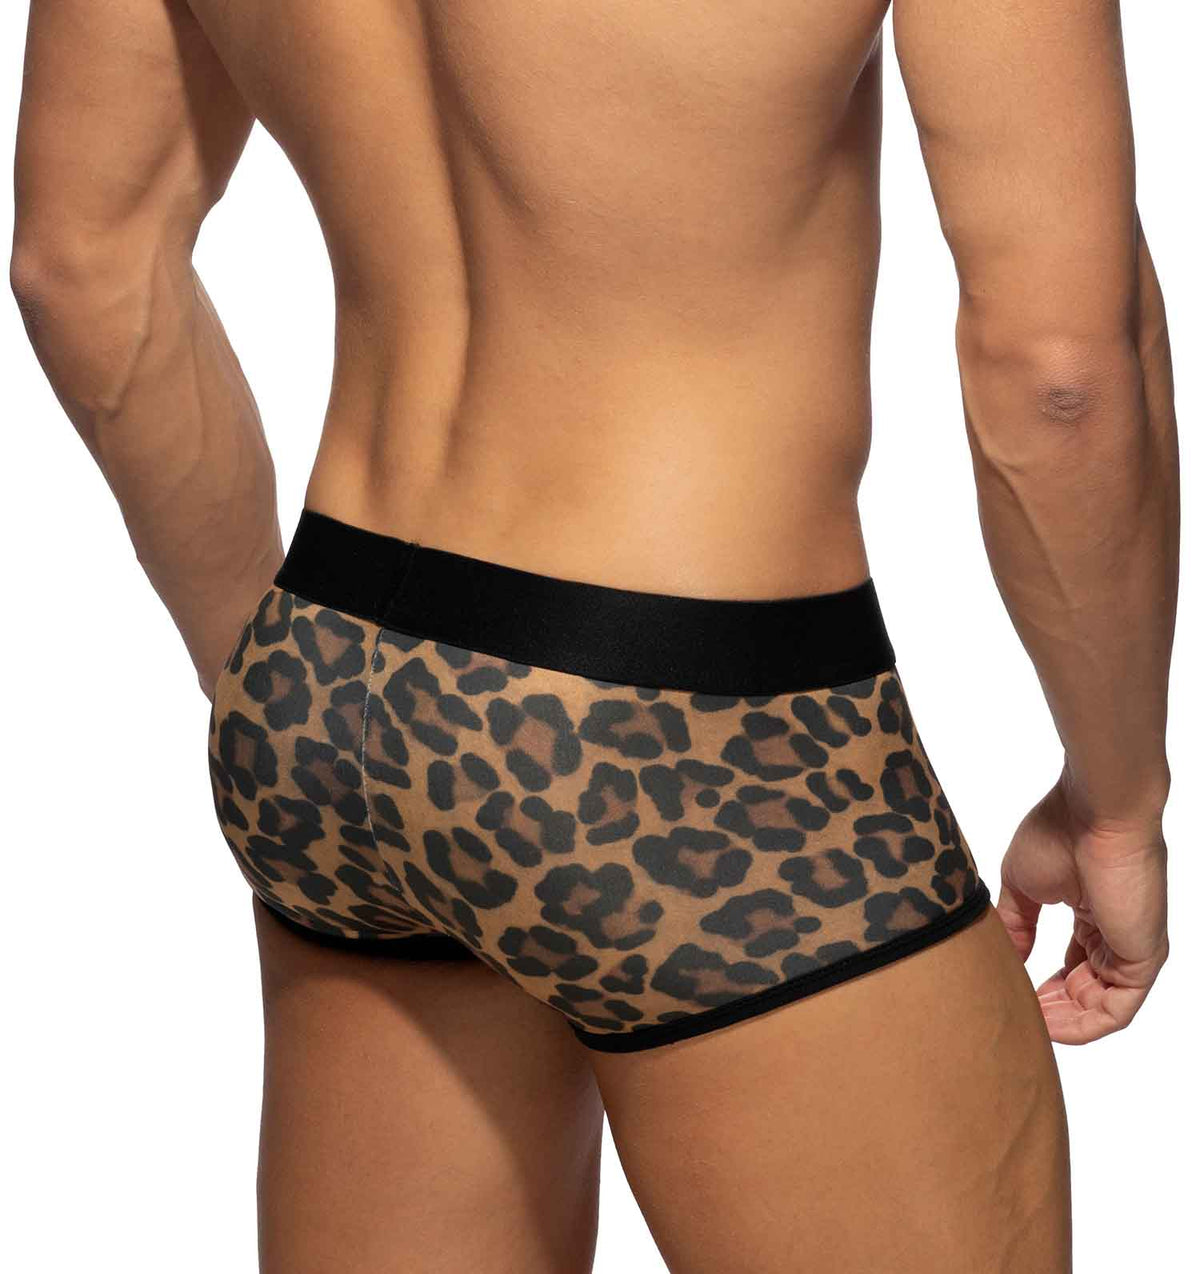 Addicted Leopard Fresh Underwear - Discover your wild side!